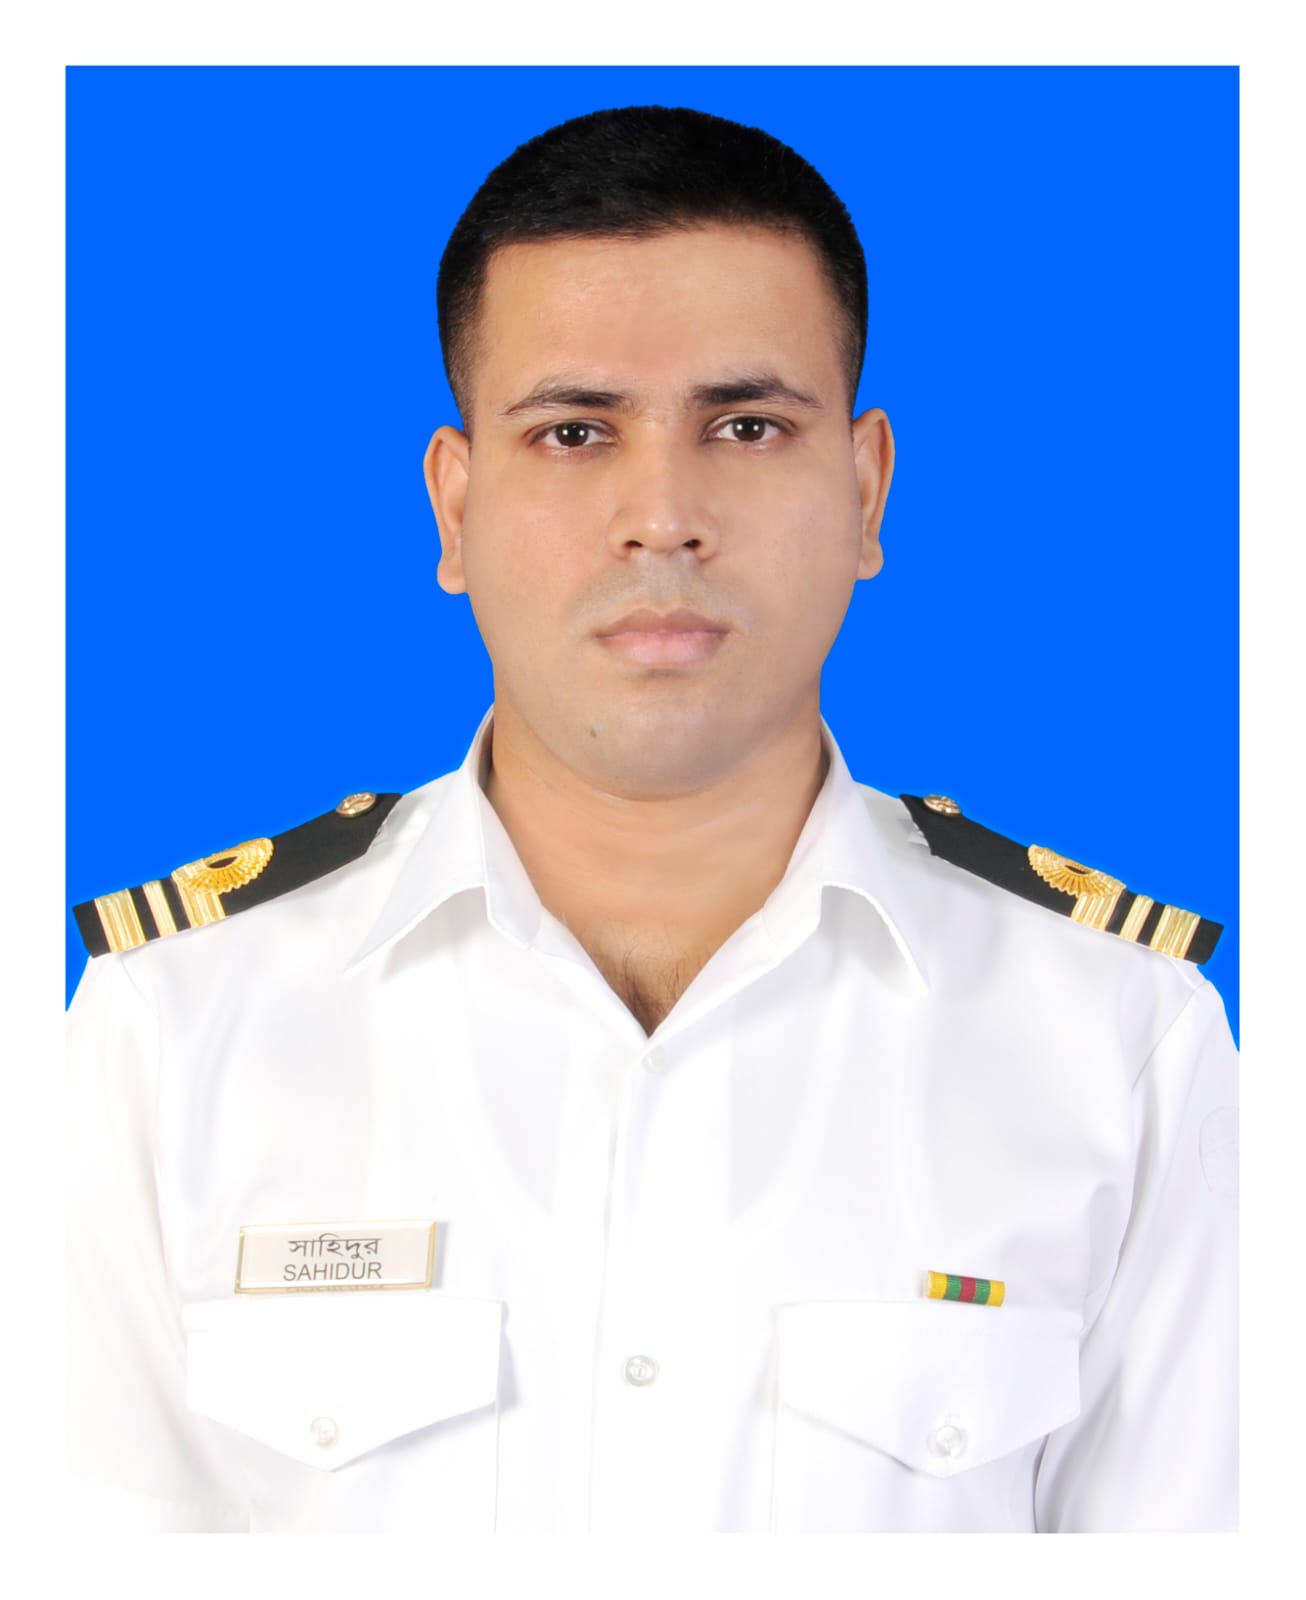 Lt Cdr Sahidur Rahman,